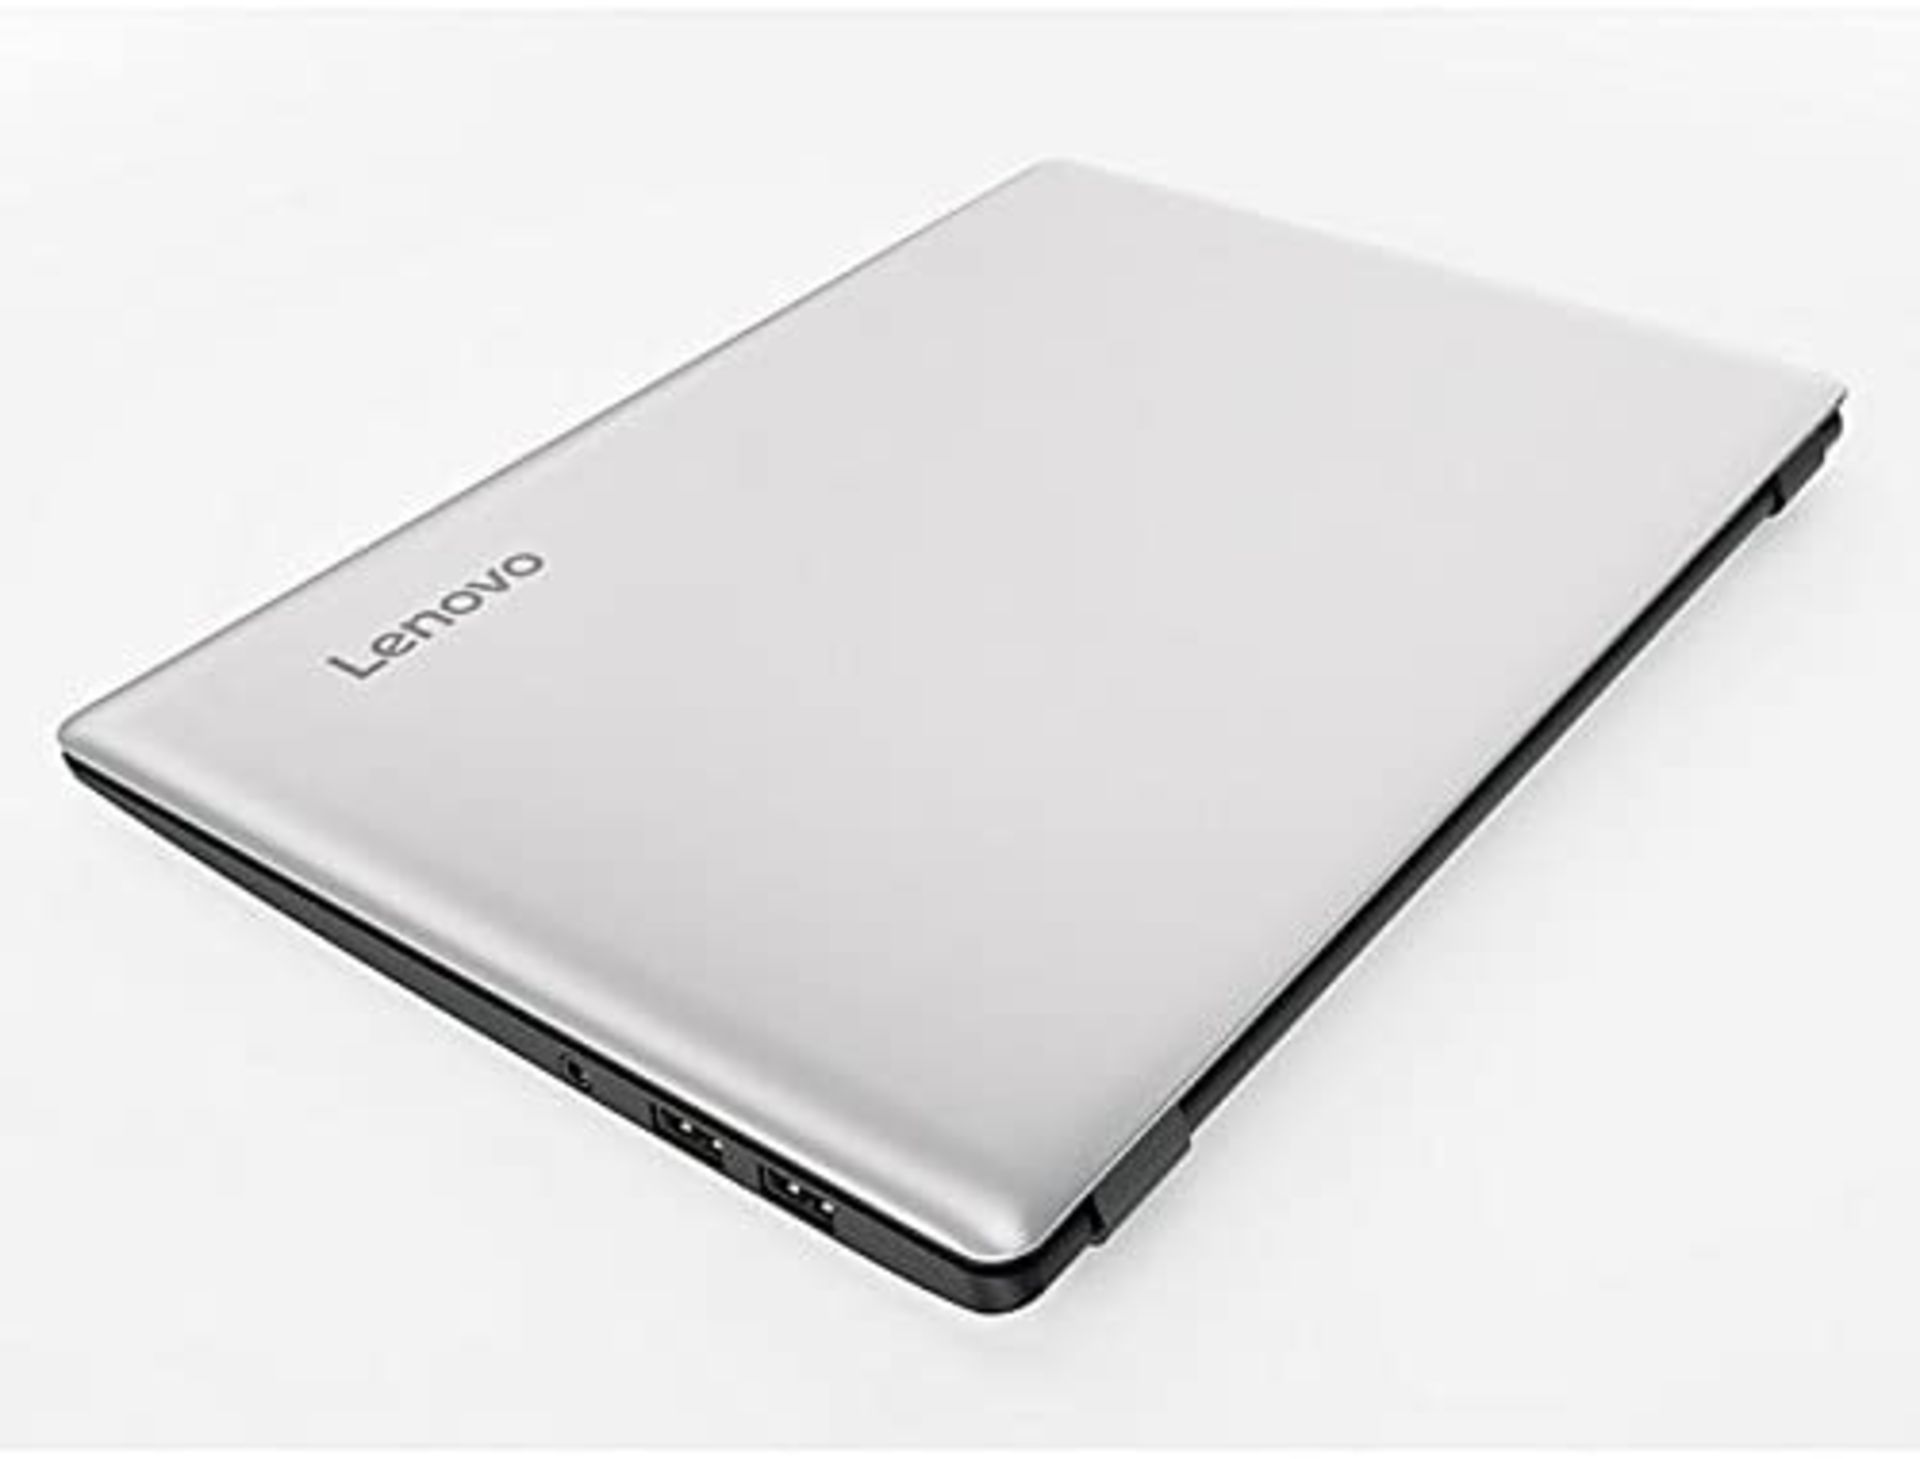 (T21) 1 x GRADE B - Lenovo Ideapad 110S 11.6" Laptop Intel Celeron N3060, 2GB RAM, 32GB eMMC, W... - Image 2 of 3